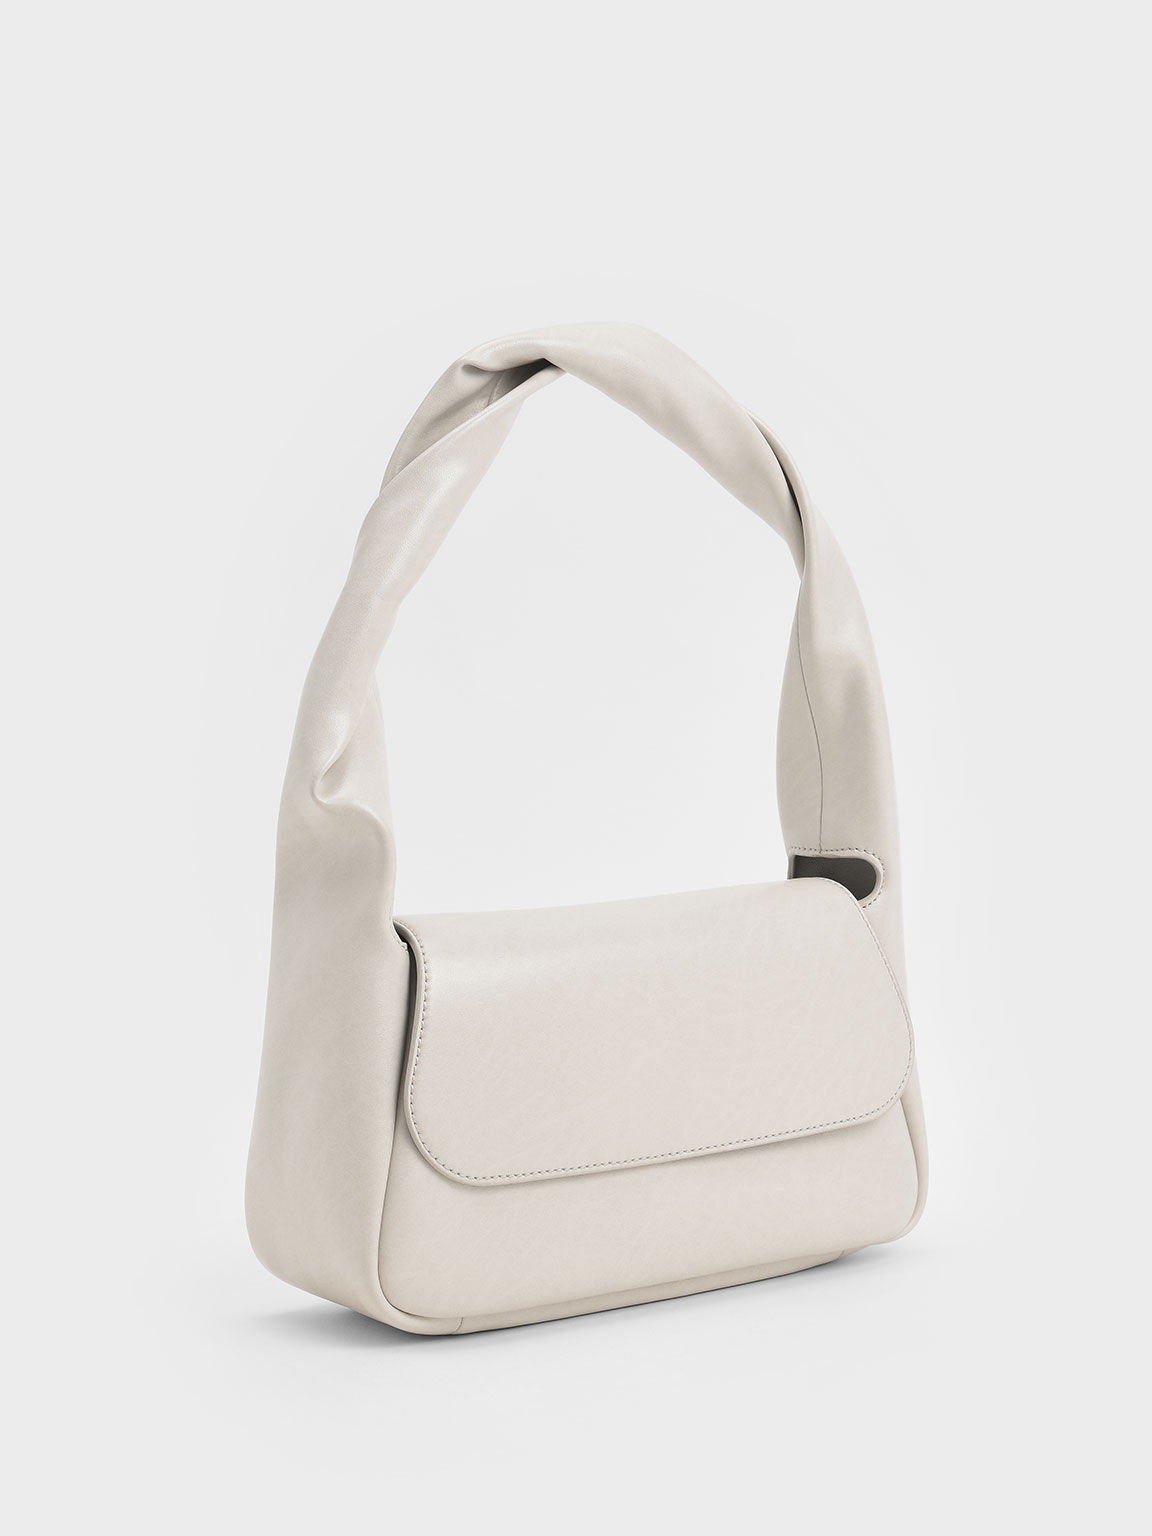 Willow Twist Top Handle Shoulder Bag, Light Grey, hi-res